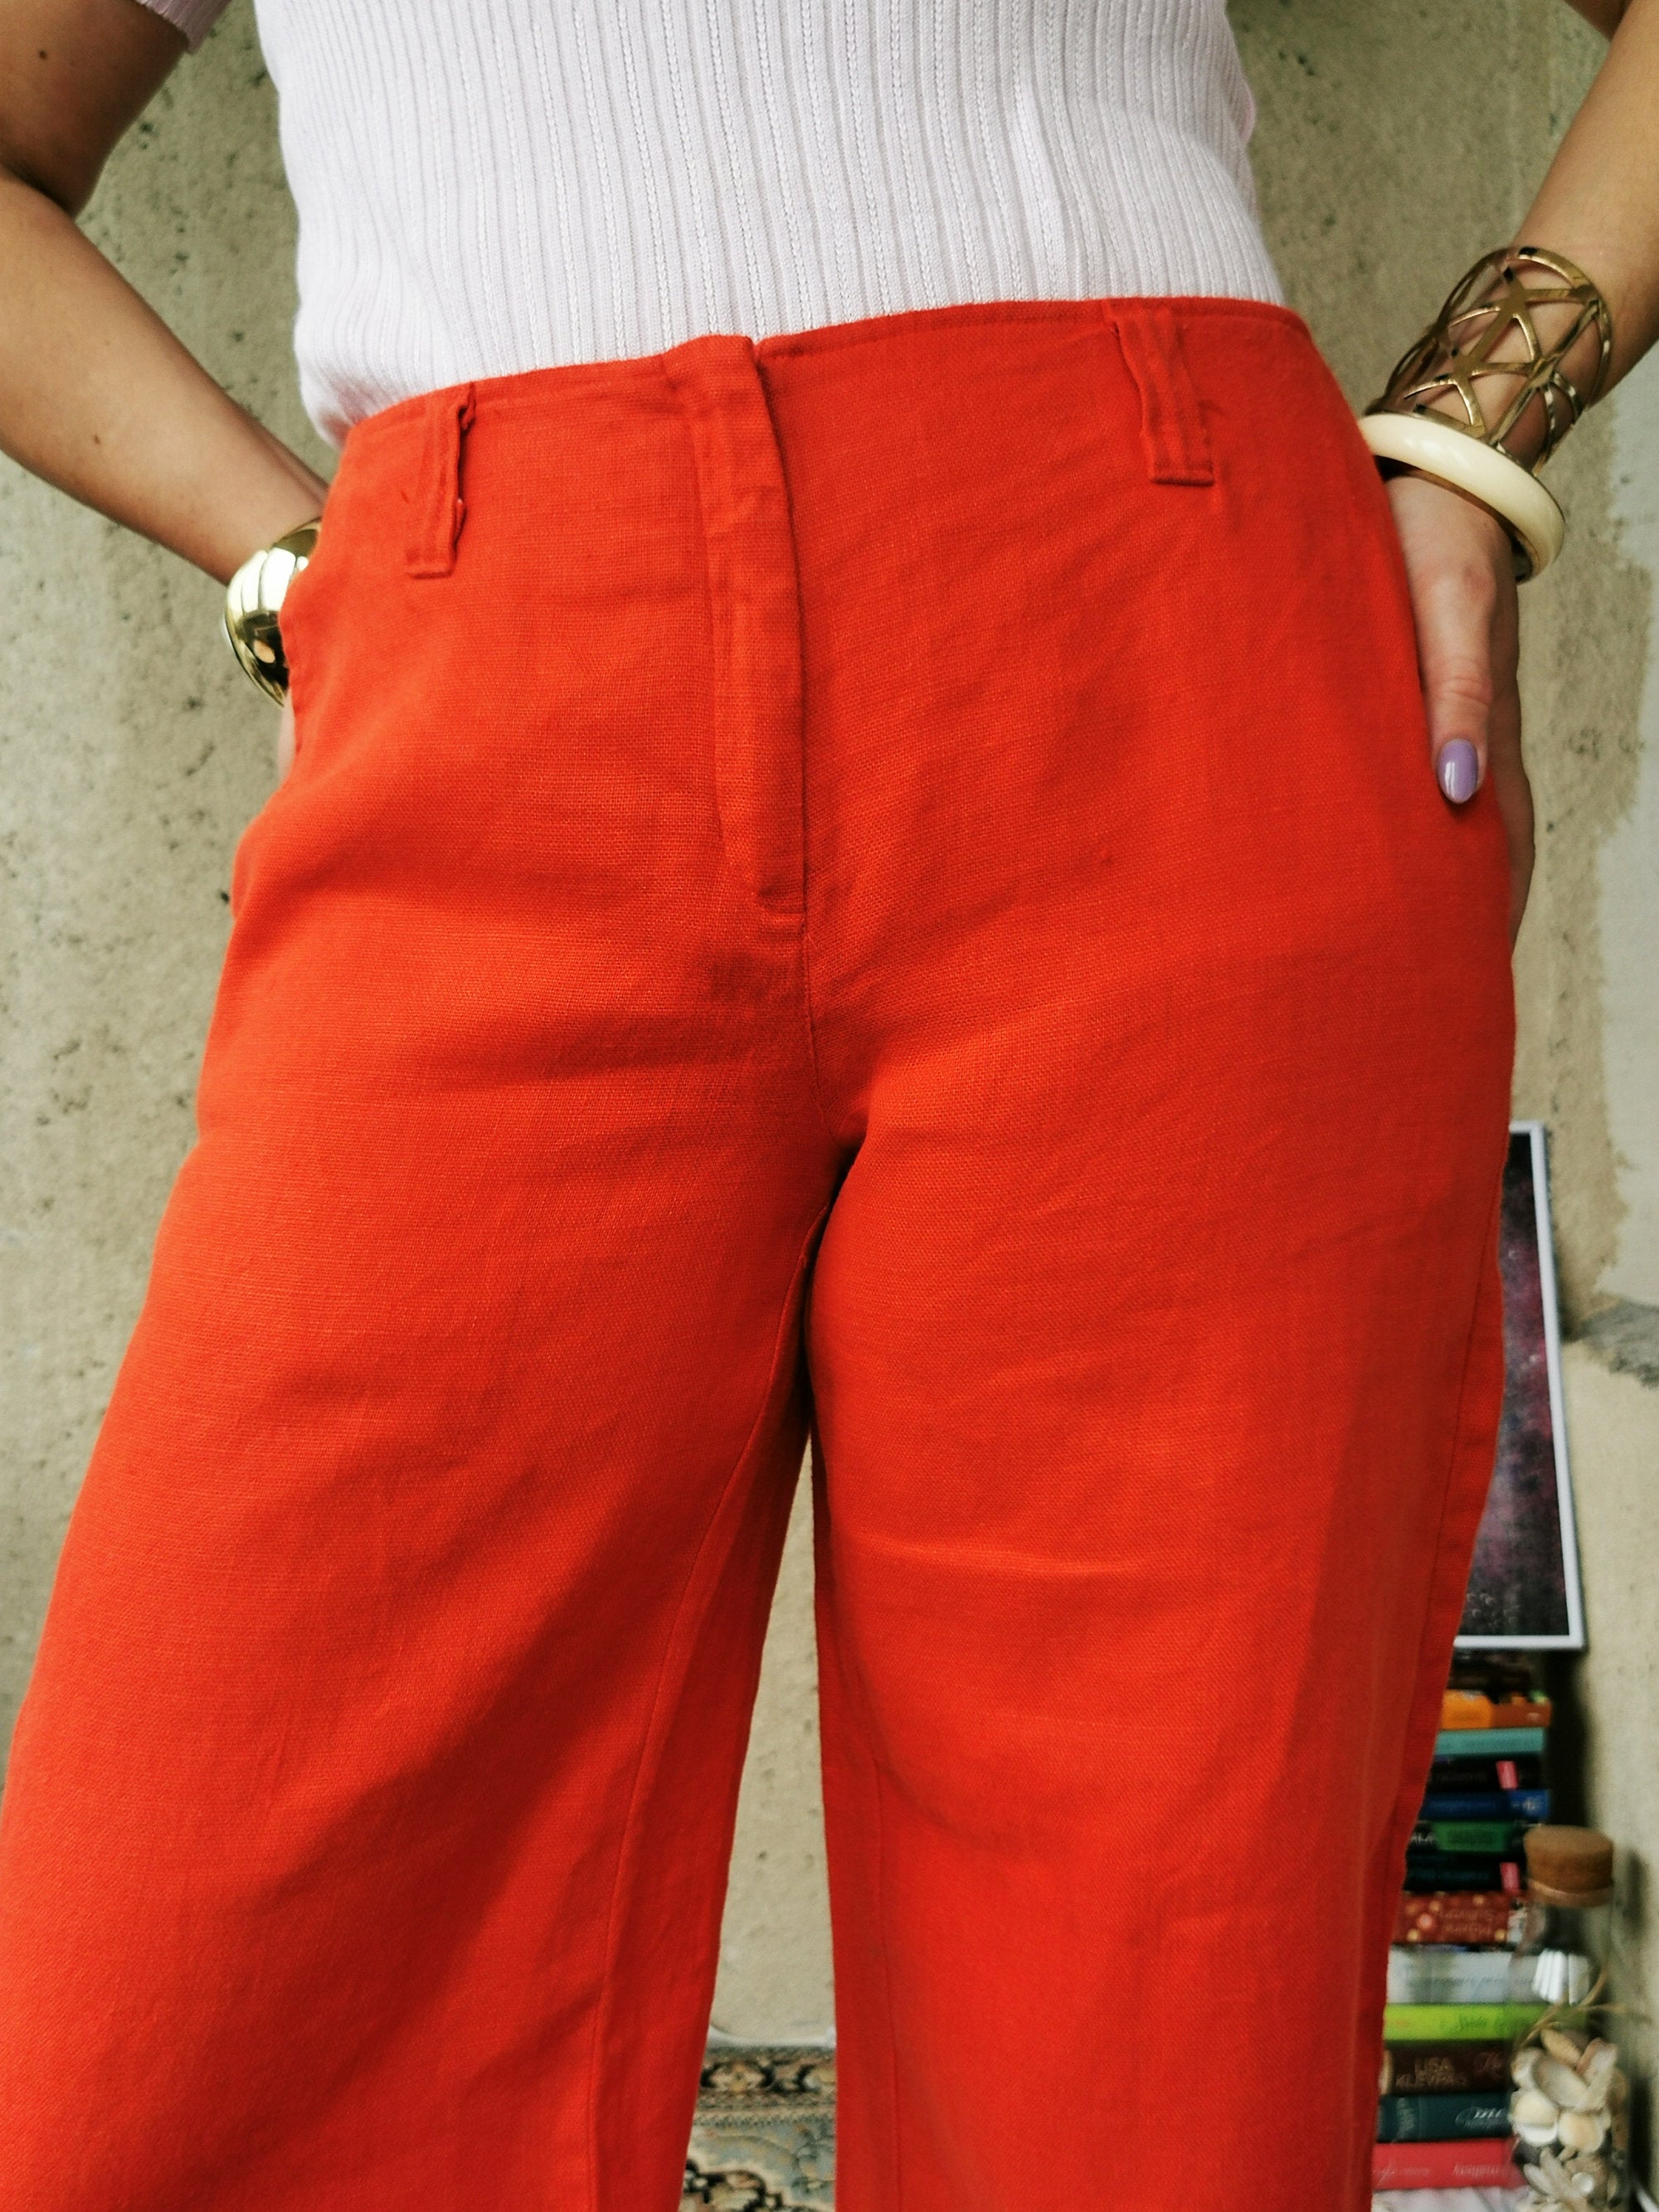 Vintage 80s minimalist scarlet red linen Bermuda shorts